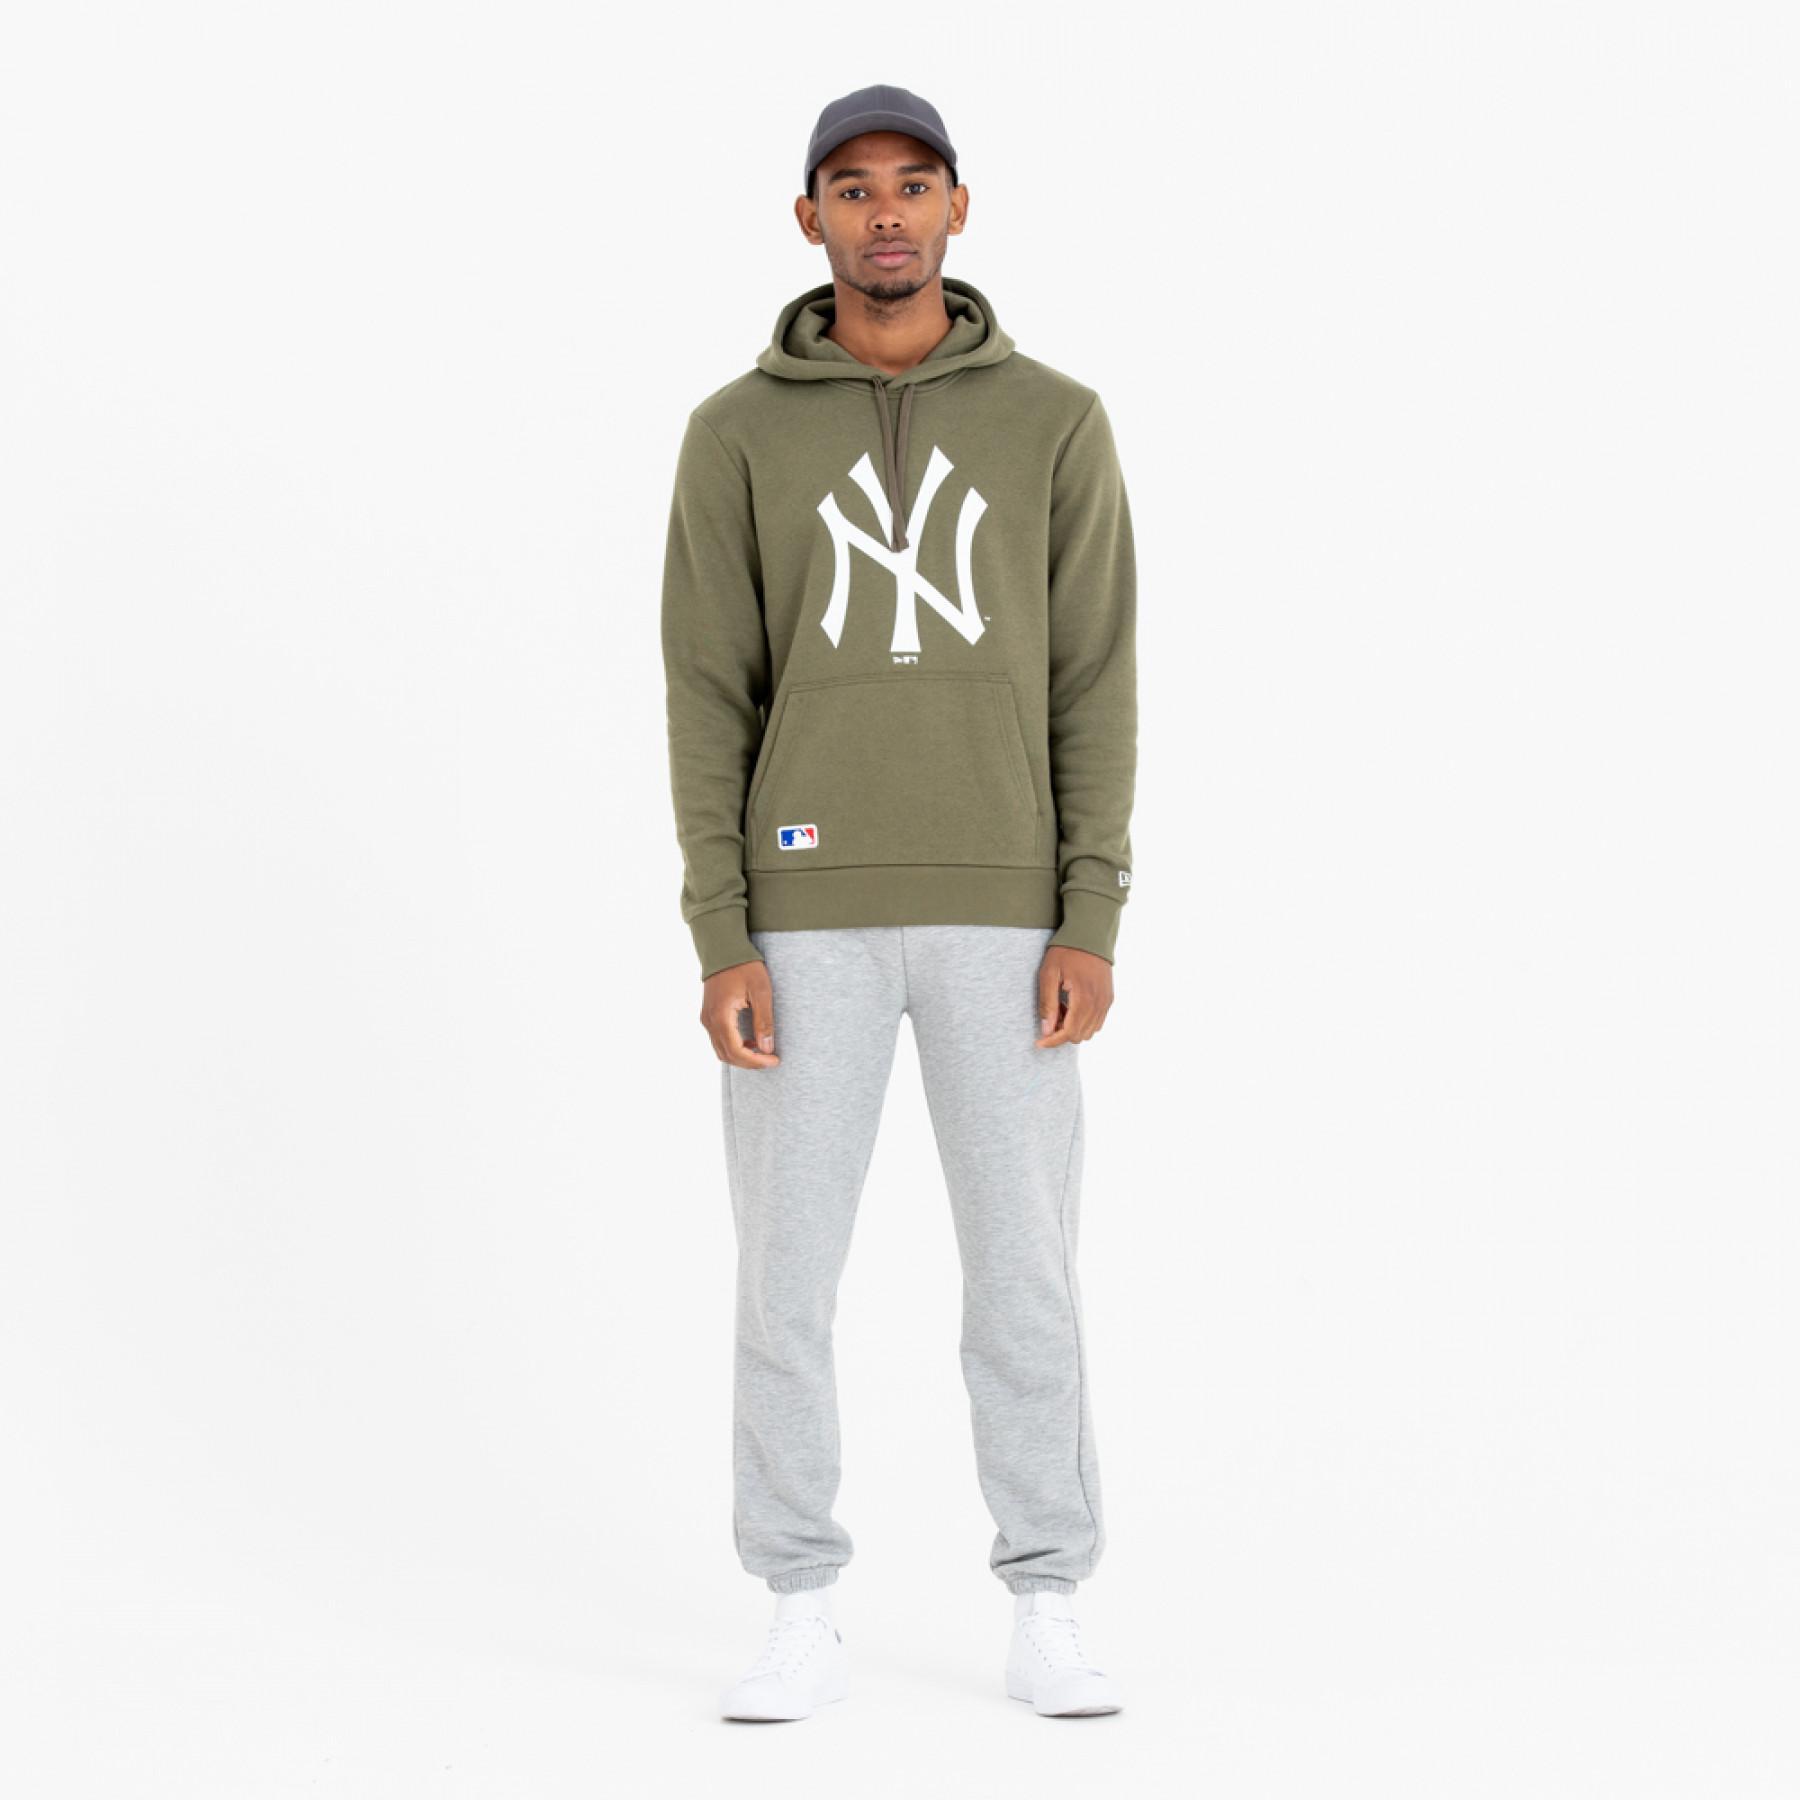 Sudadera con capucha New Era New York Yankees logo